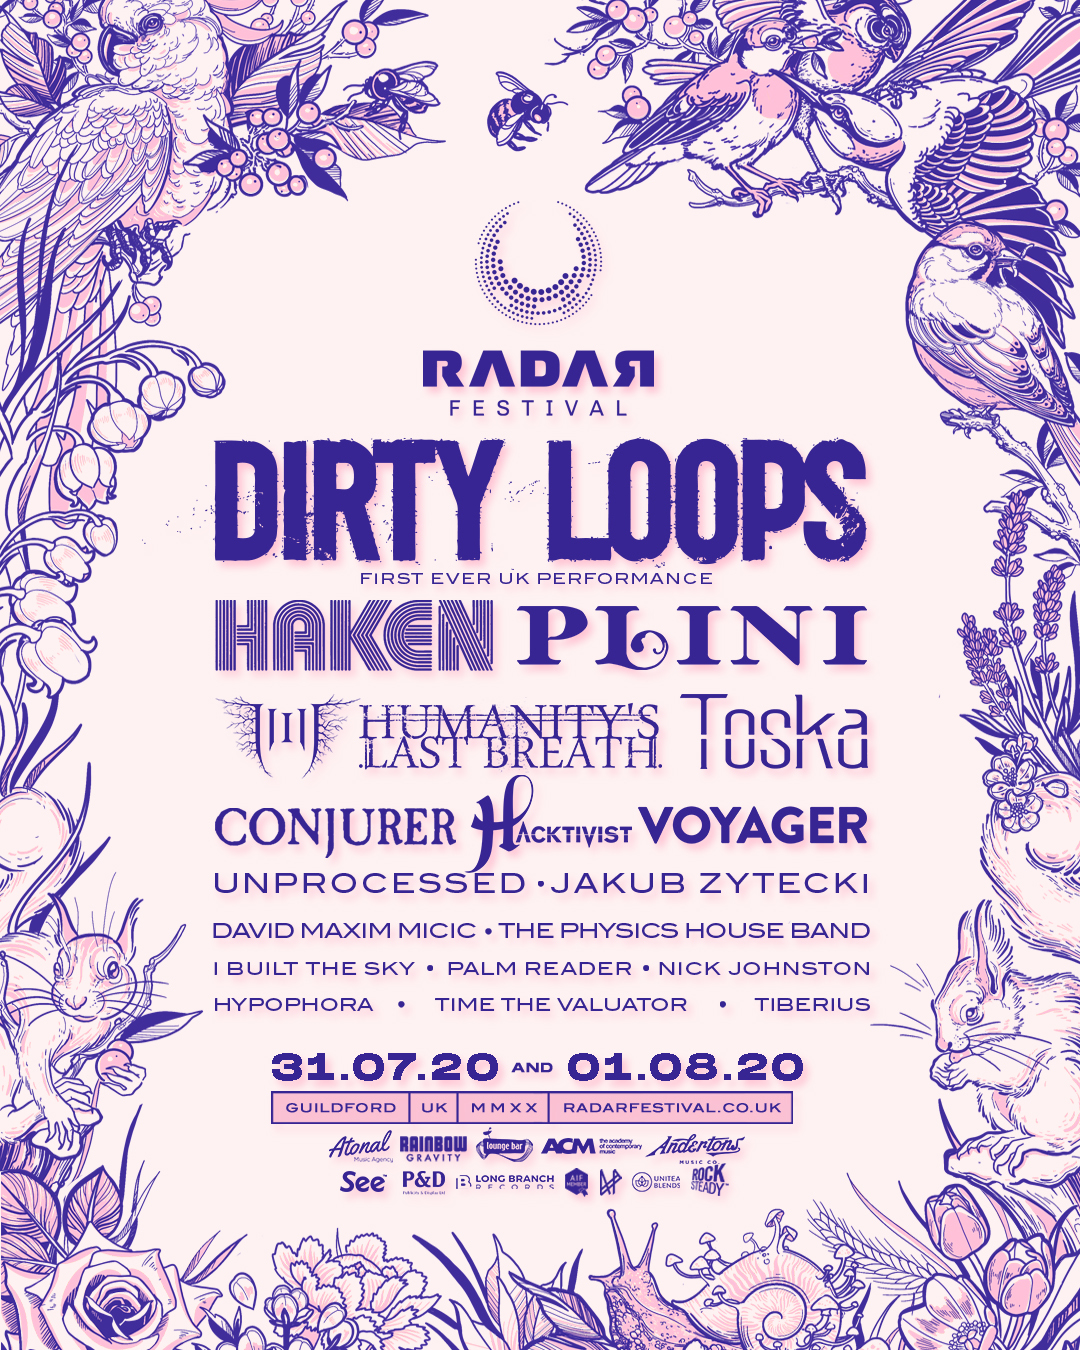 Radar Festival announce 11 more bands Distorted Sound Magazine